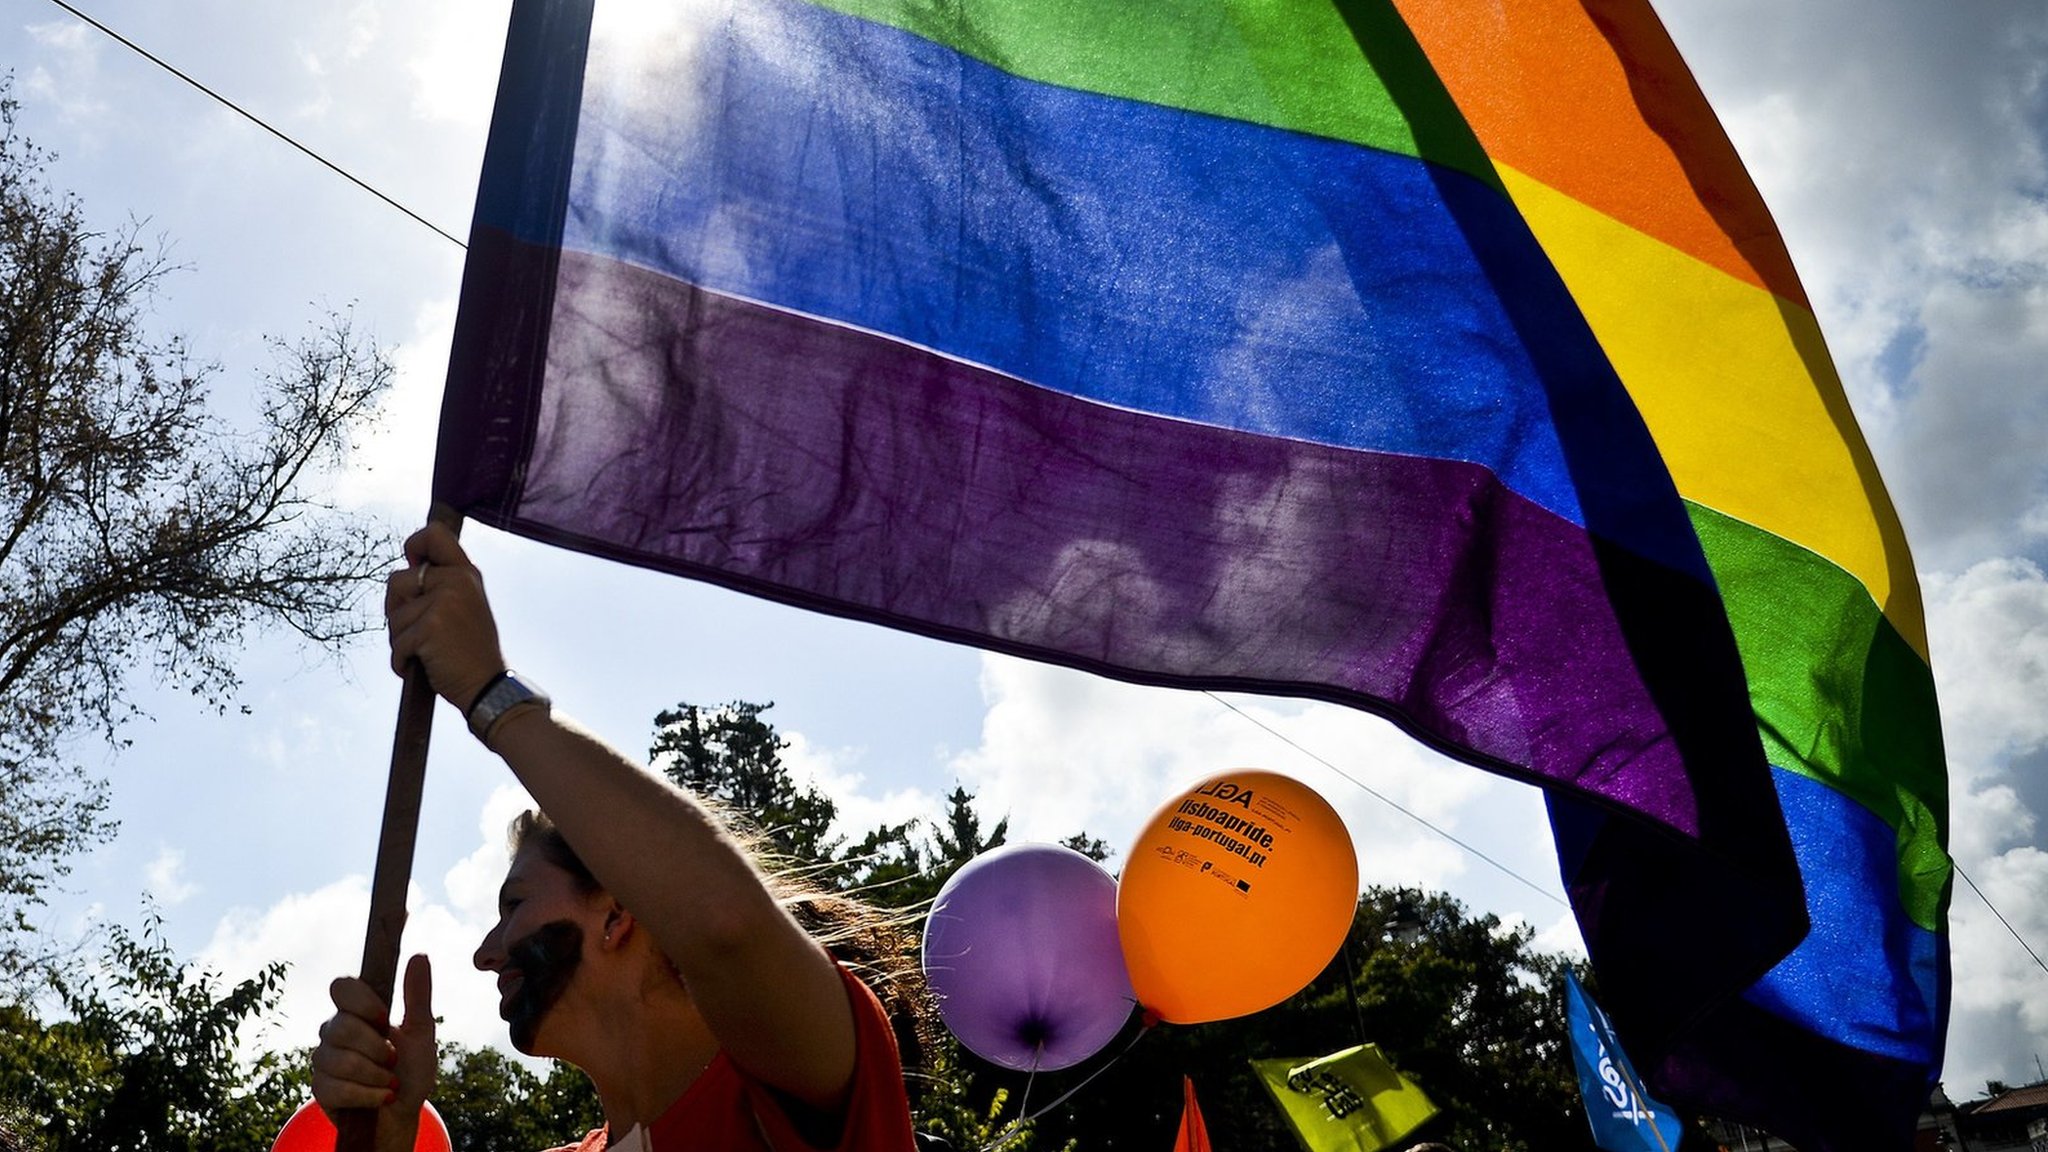 LGBT rights in Portugal - Wikipedia